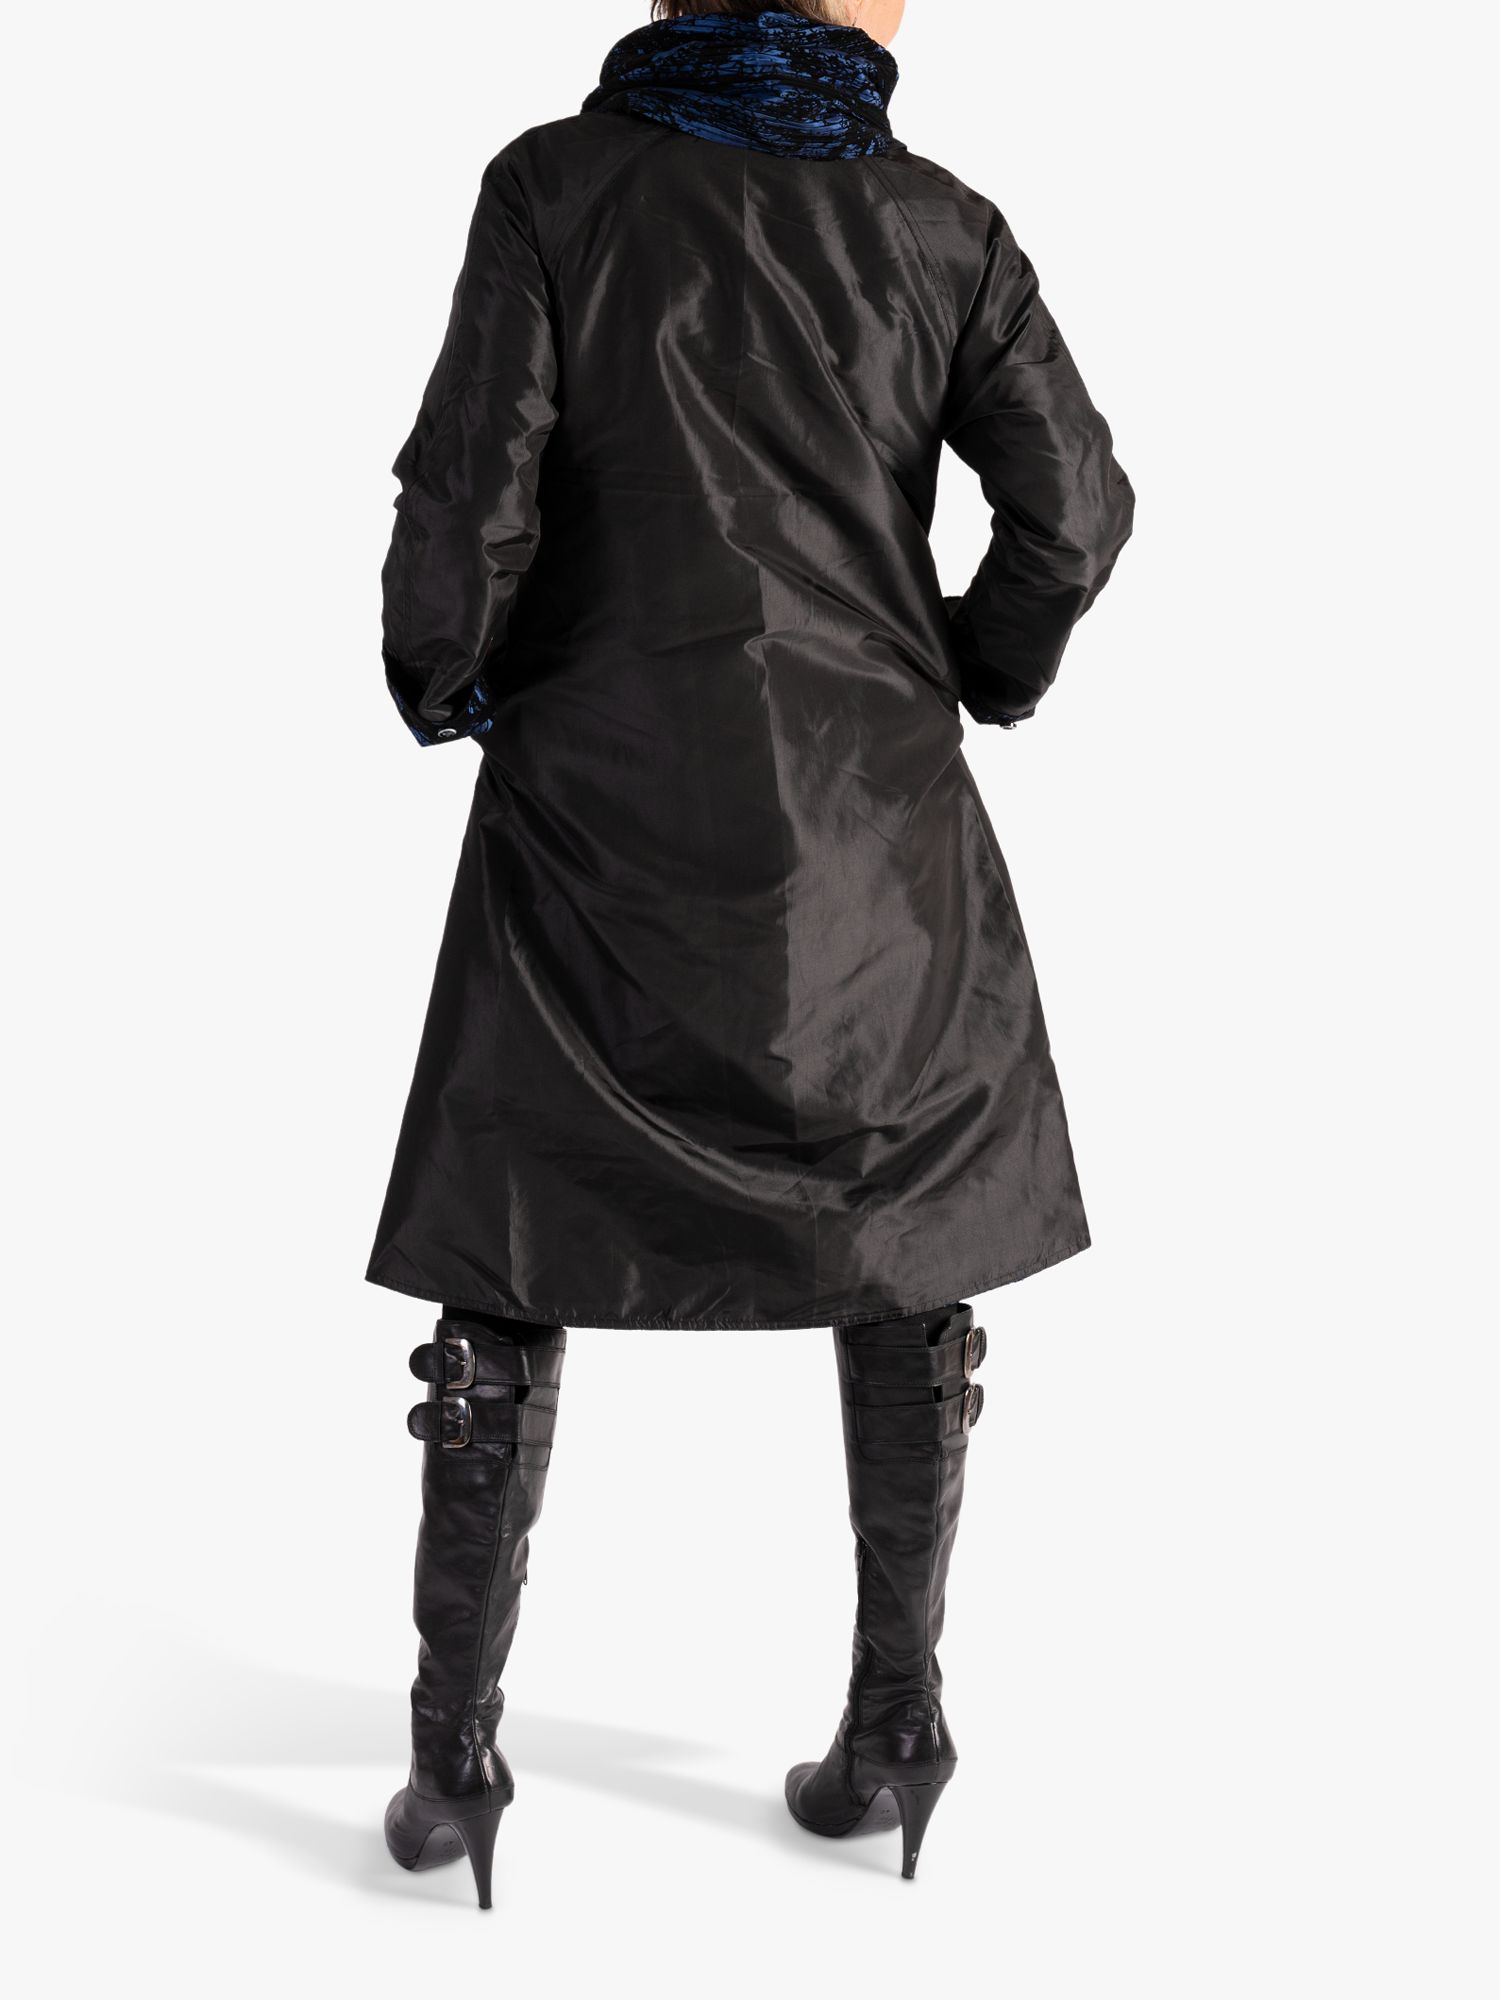 chesca Flock Raincoat, Navy/Black at John Lewis & Partners